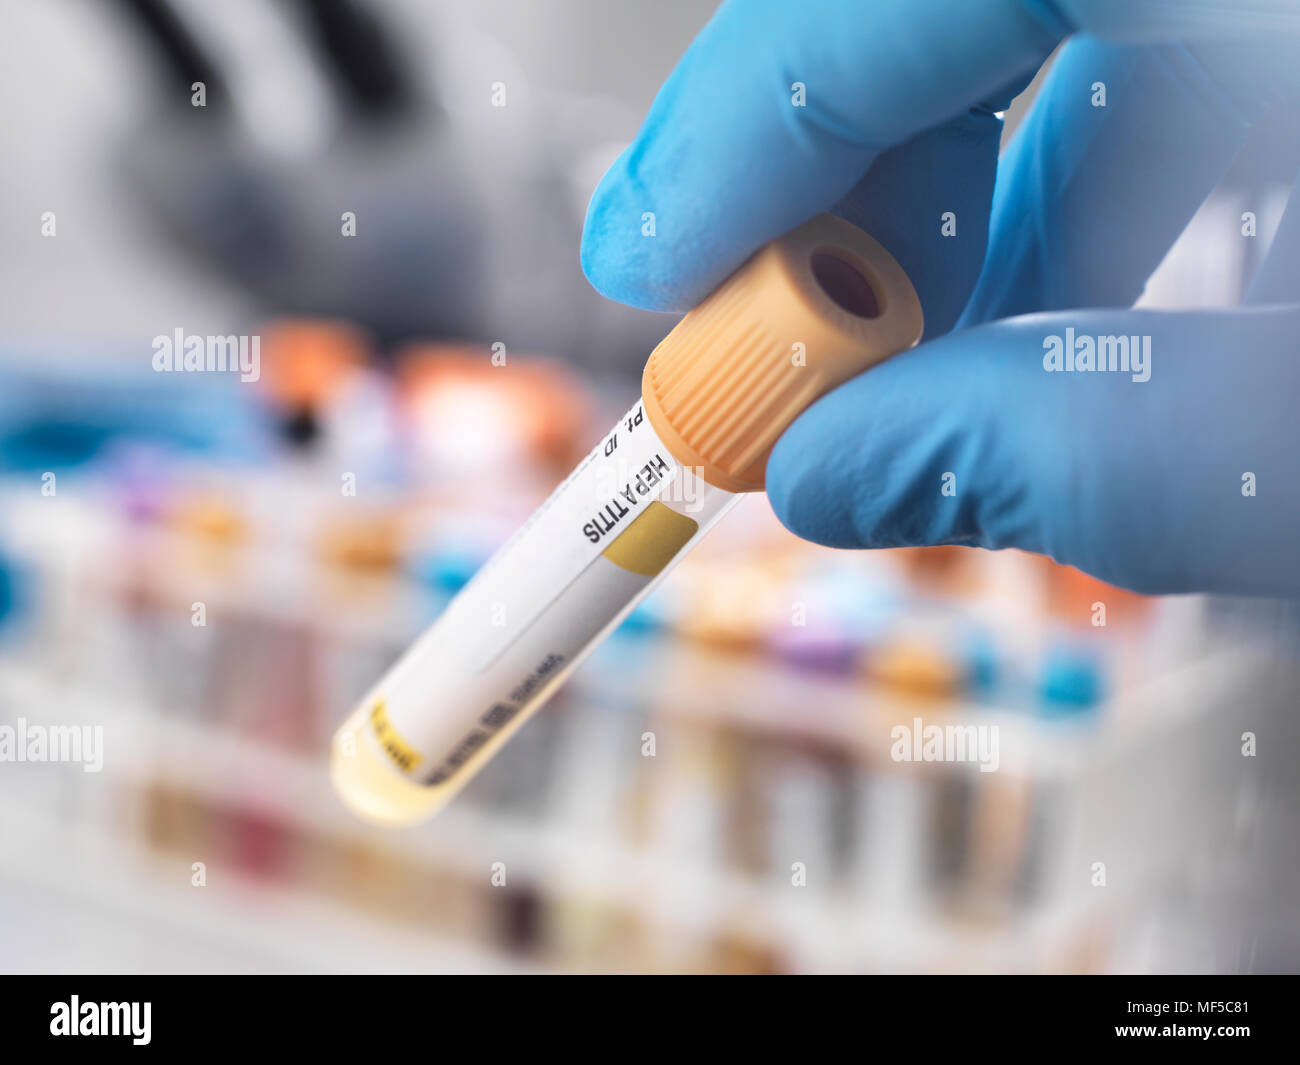 Medical technician preparing a human sample for hepatitis testing Stock Photo